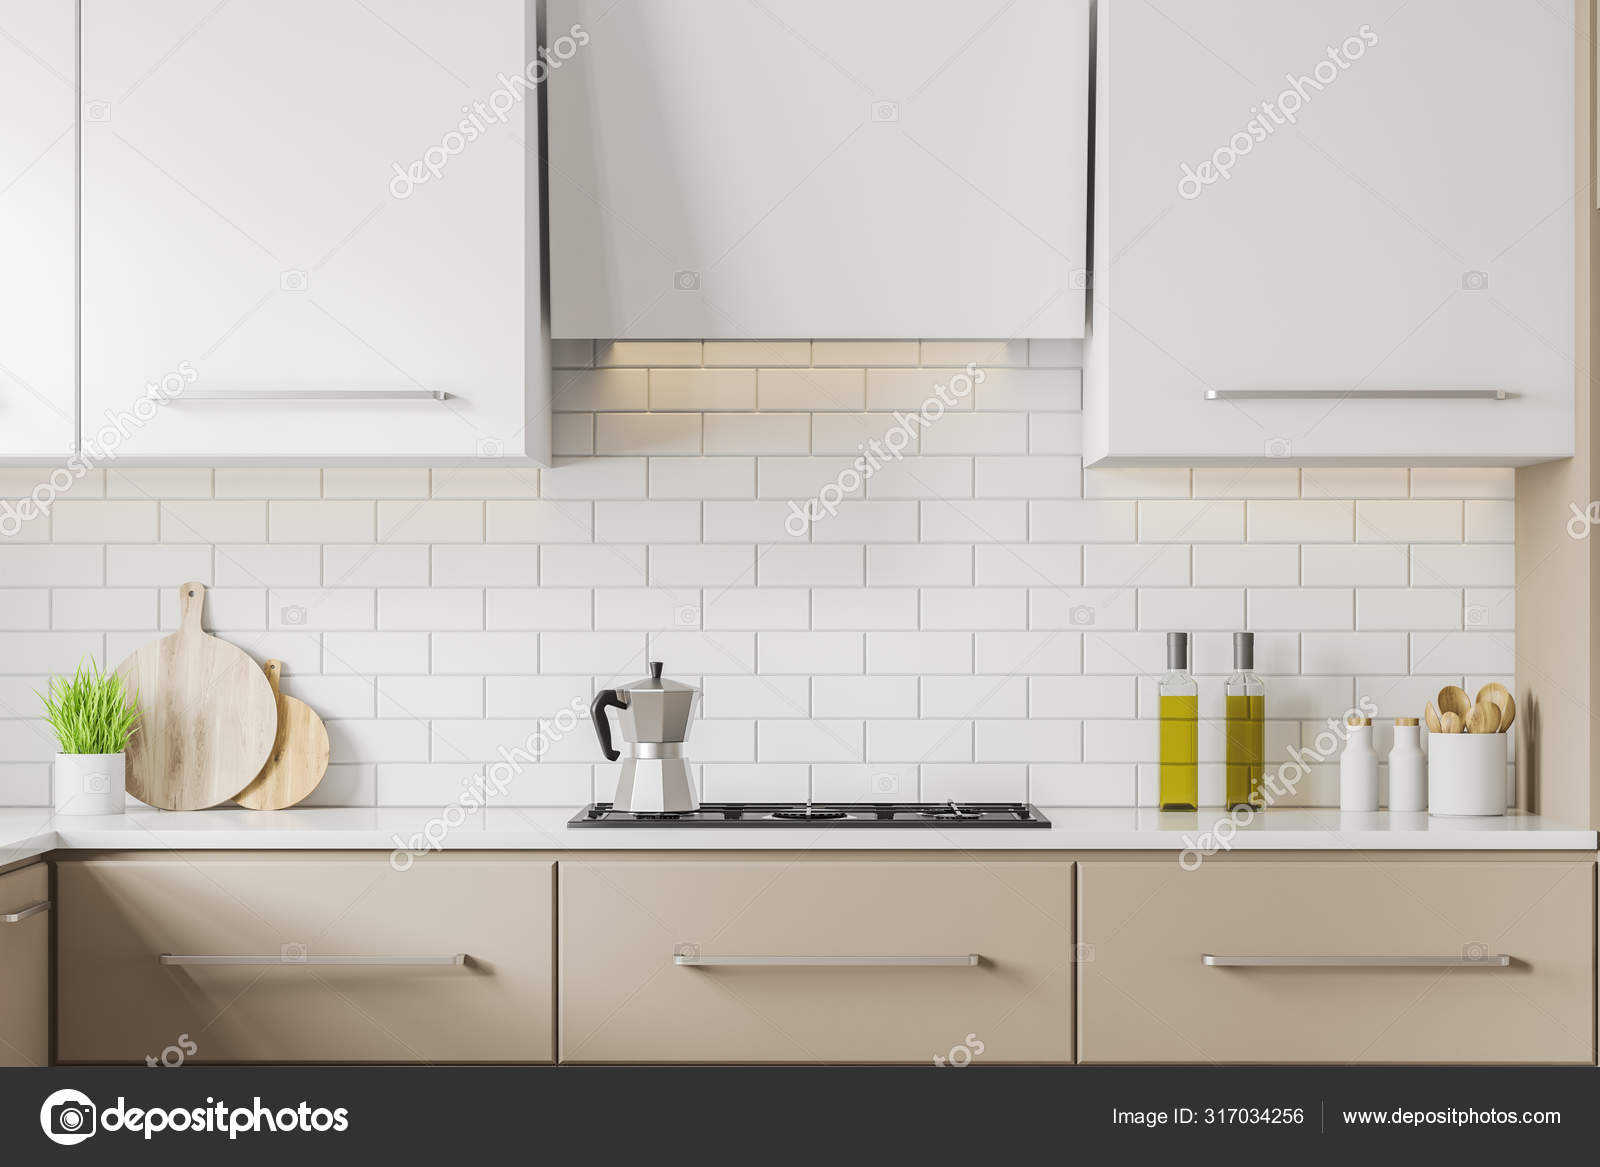 https://st3.depositphotos.com/2673929/31703/i/1600/depositphotos_317034256-stock-photo-beige-kitchen-countertops-close-up.jpg